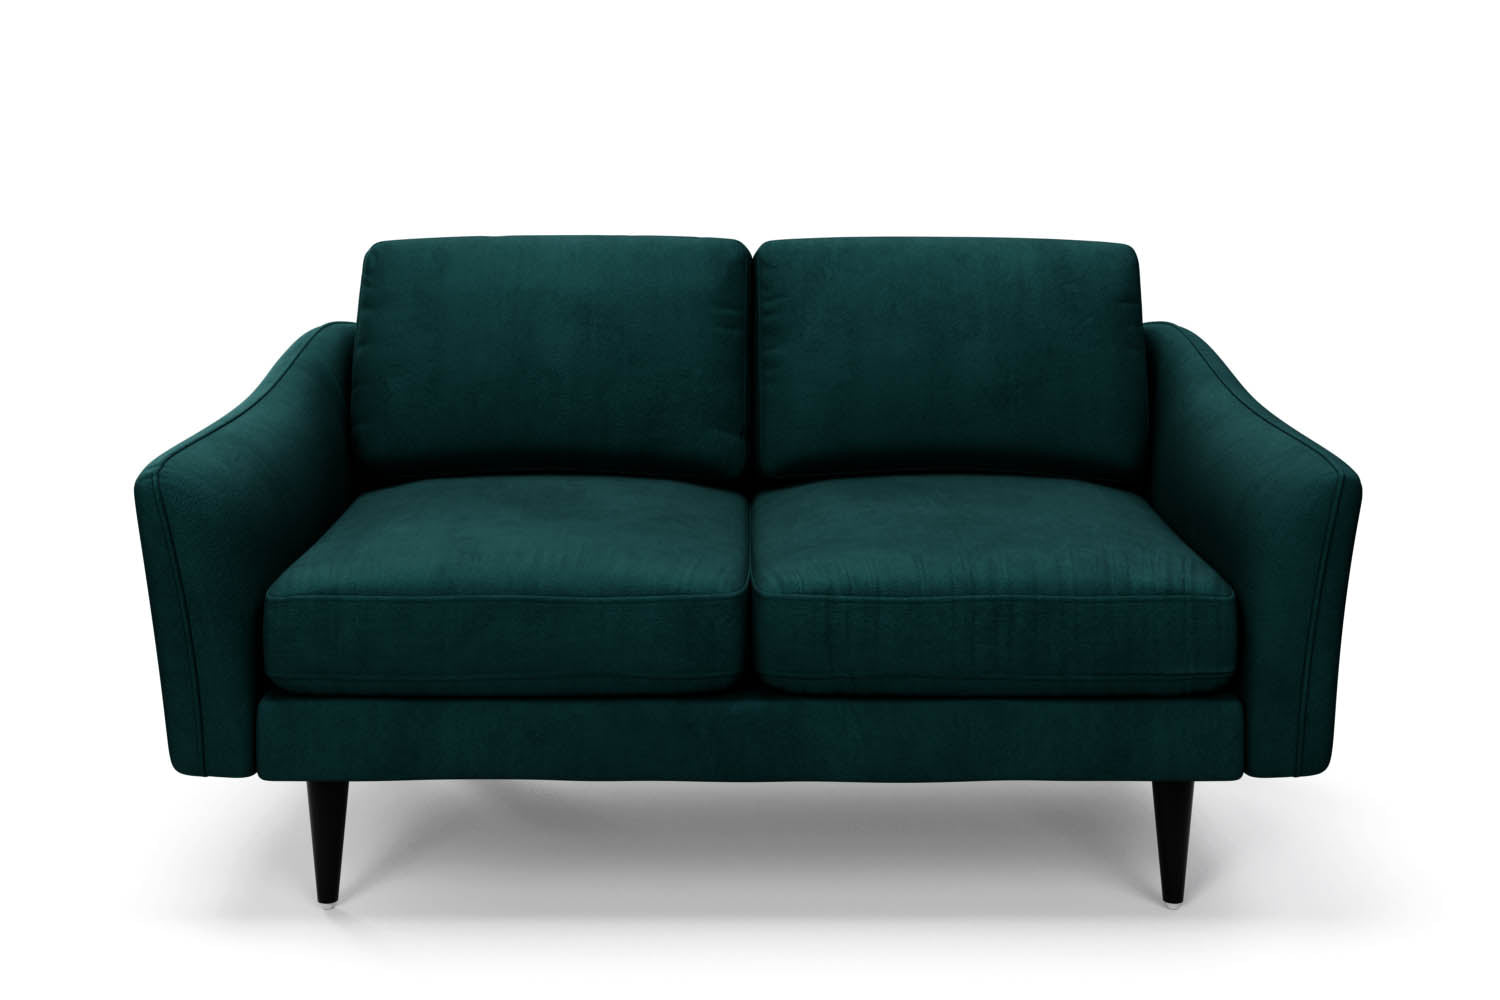 SNUG | The Rebel 2 Seater Sofa in Pine Green variant_40837198381104